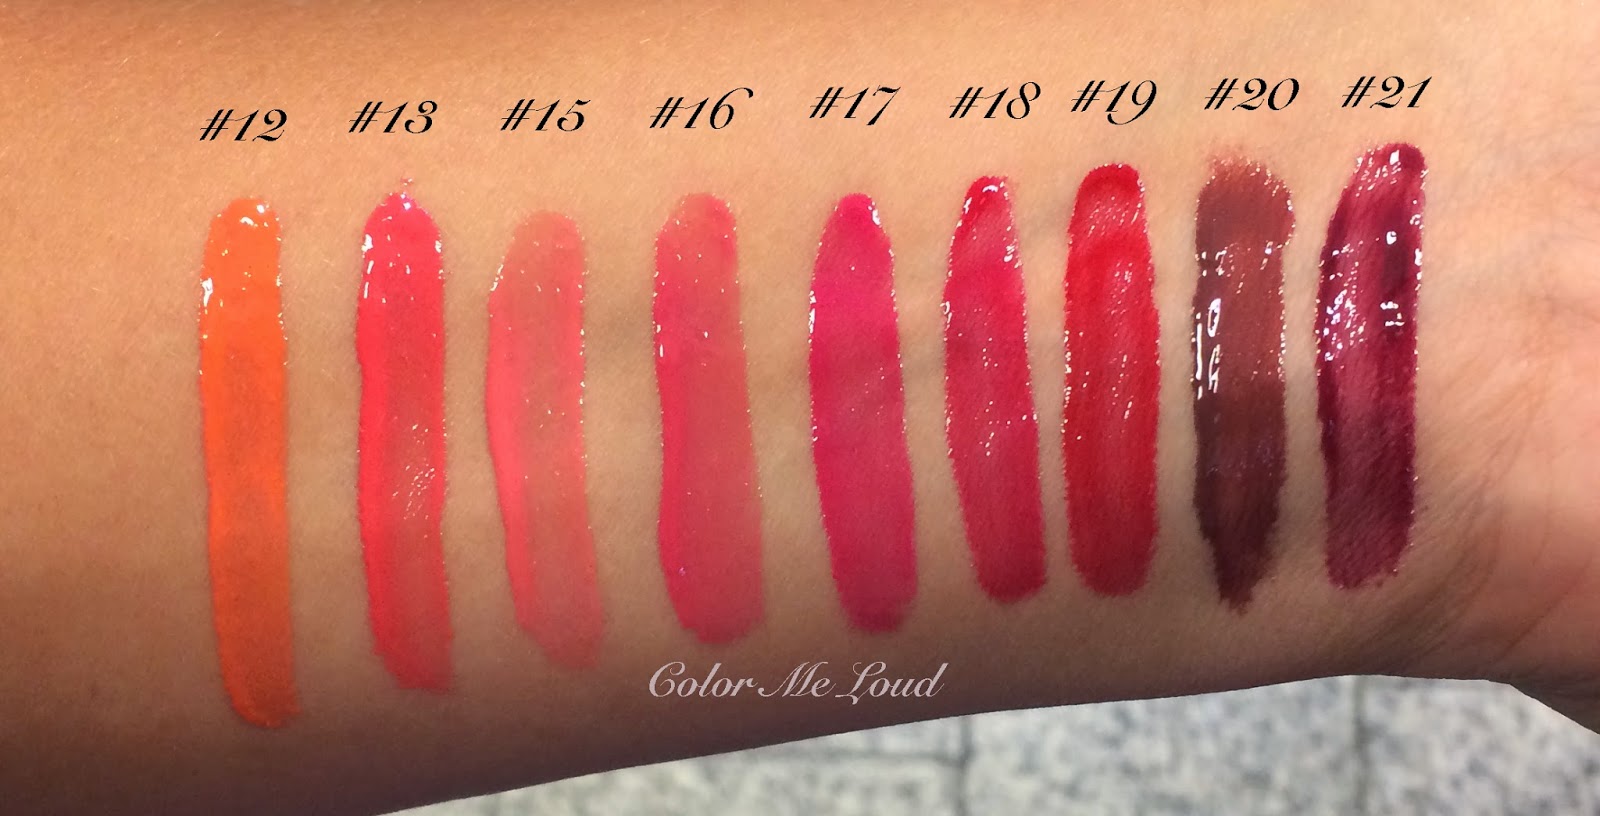 Chanel Rouge Allure Extrait de Gloss Pure Shine Intense Colour Long Wear  Lip Gloss in Imaginaire Review